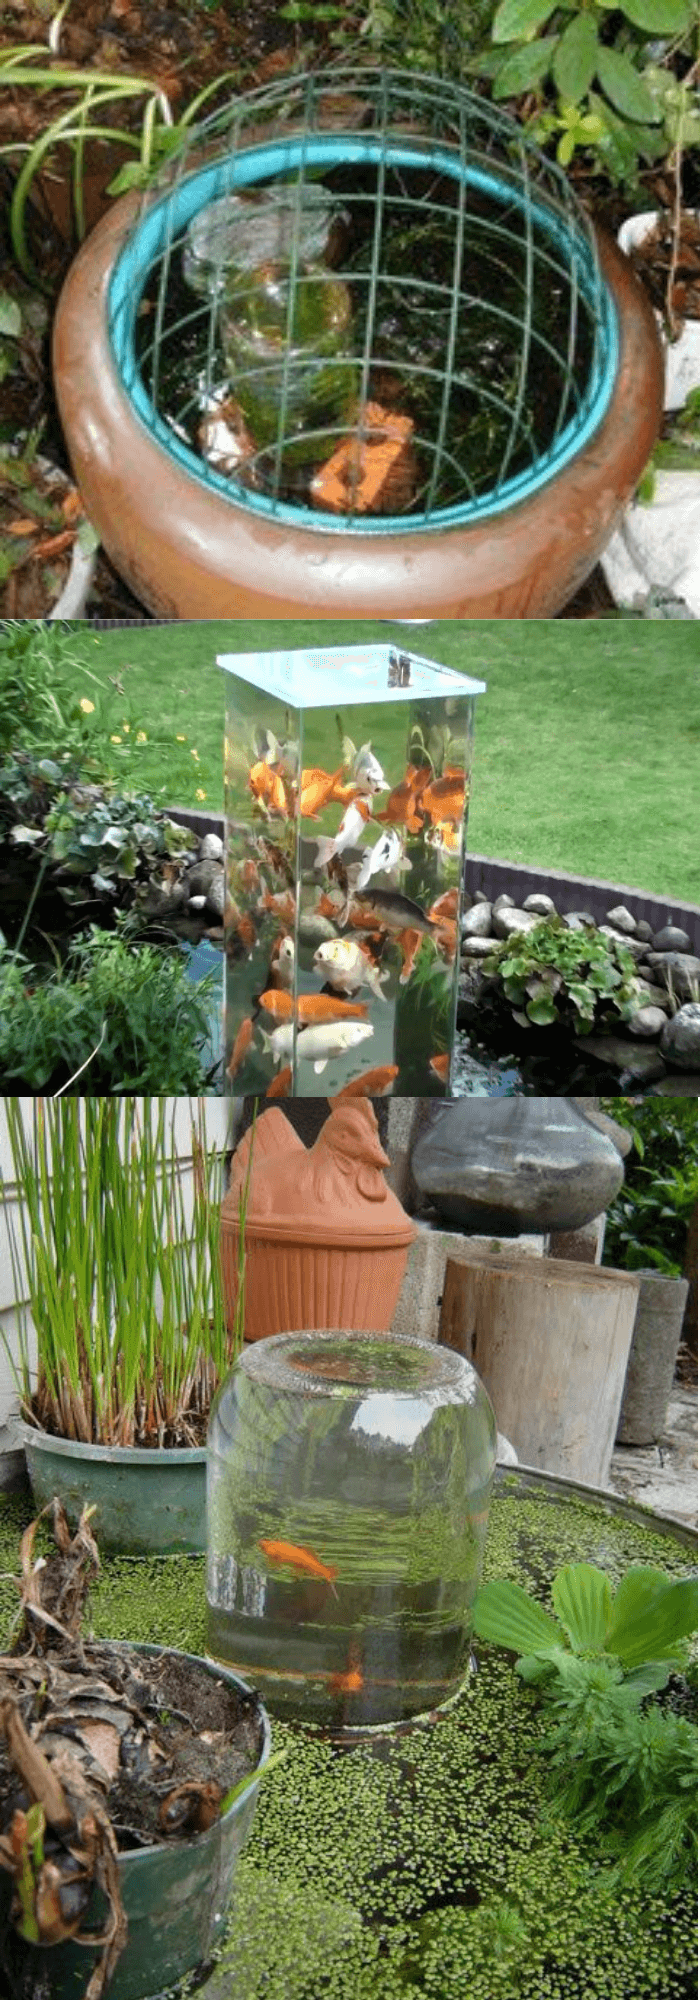 6 backyard aquarium ideas